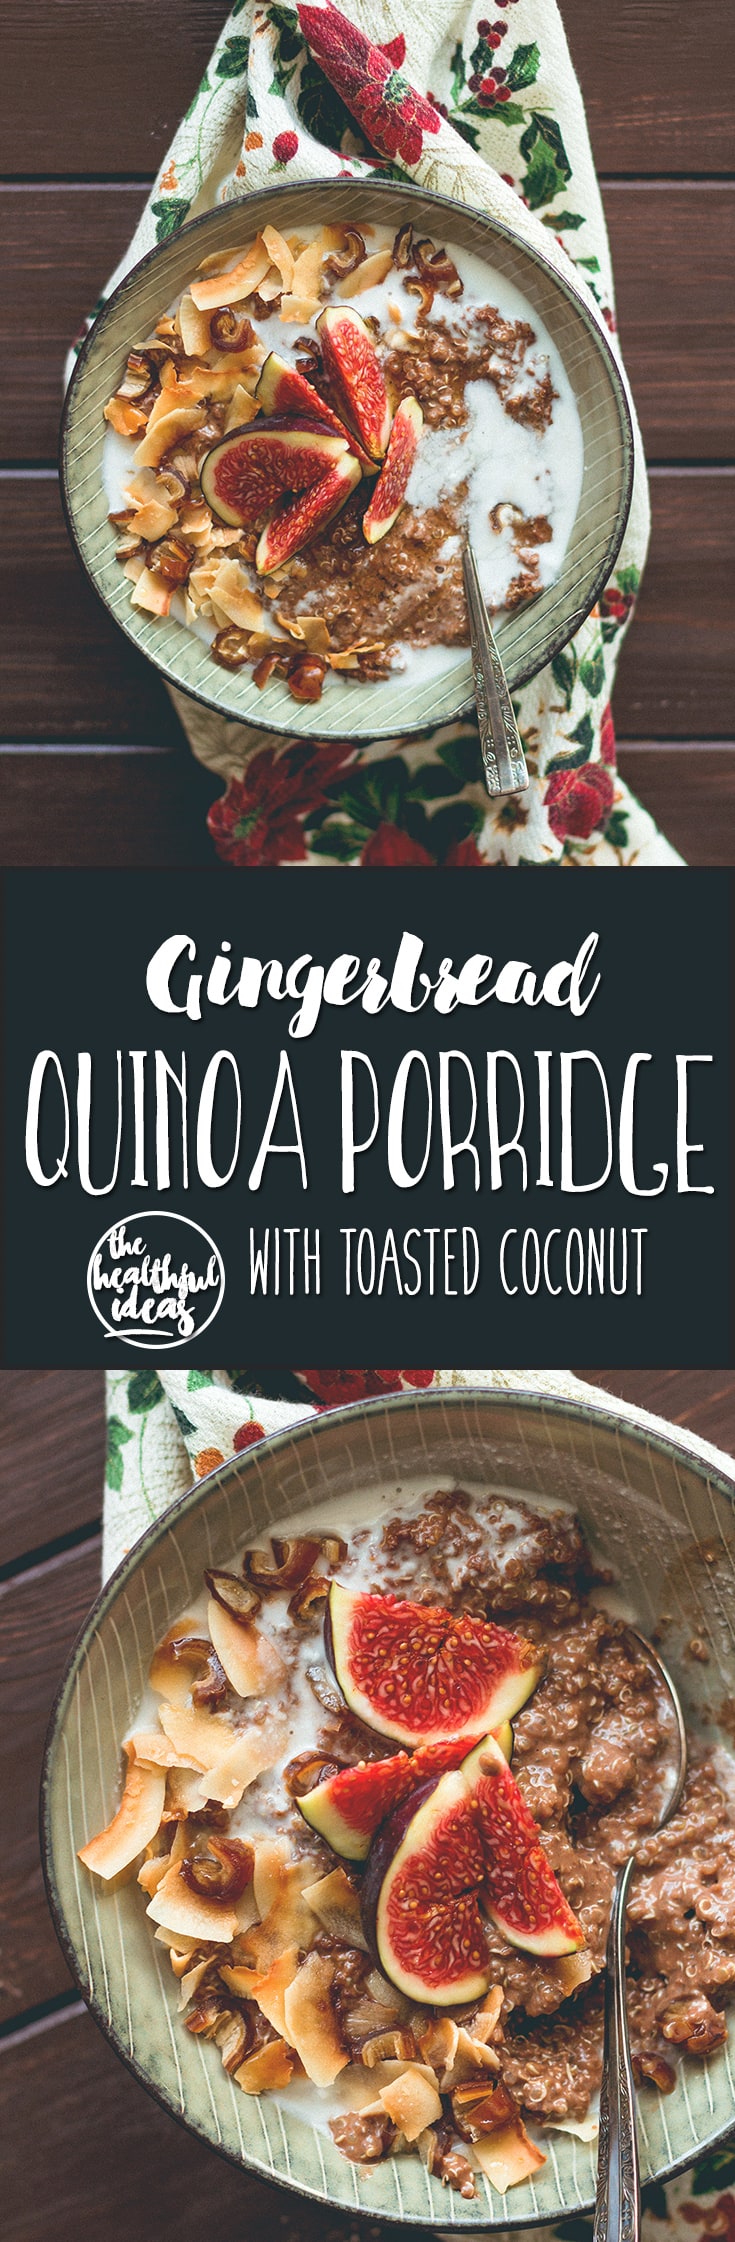 Gingerbread Quinoa Porridge with Toasted Coconut